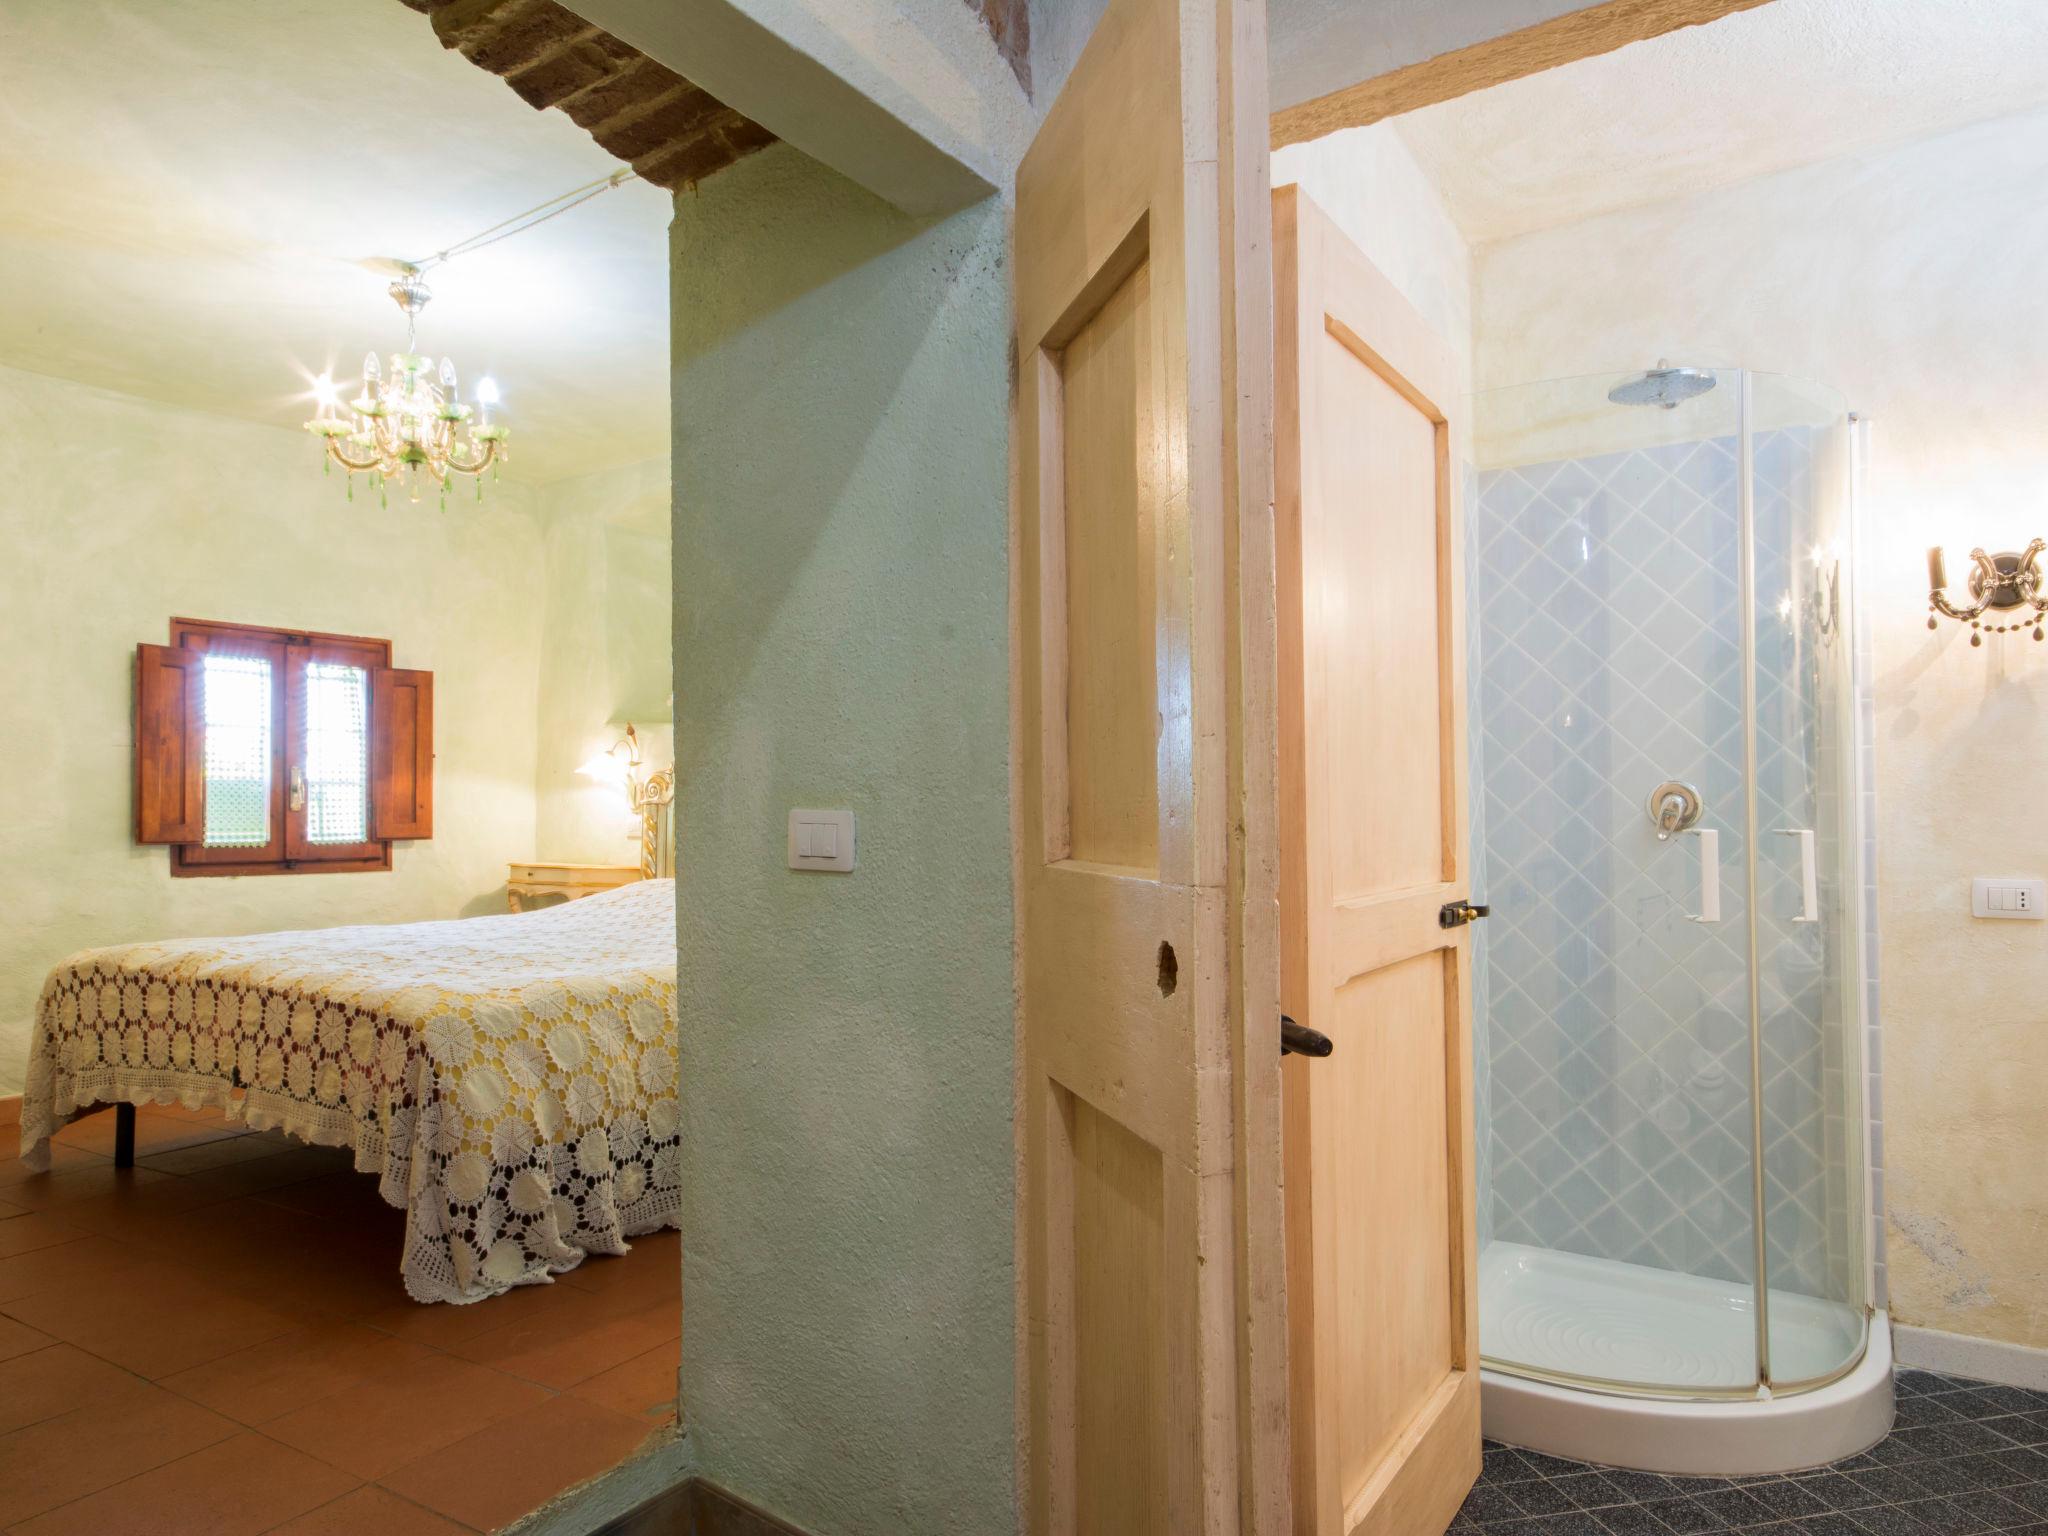 Photo 5 - Appartement de 1 chambre à San Casciano in Val di Pesa avec piscine et jardin